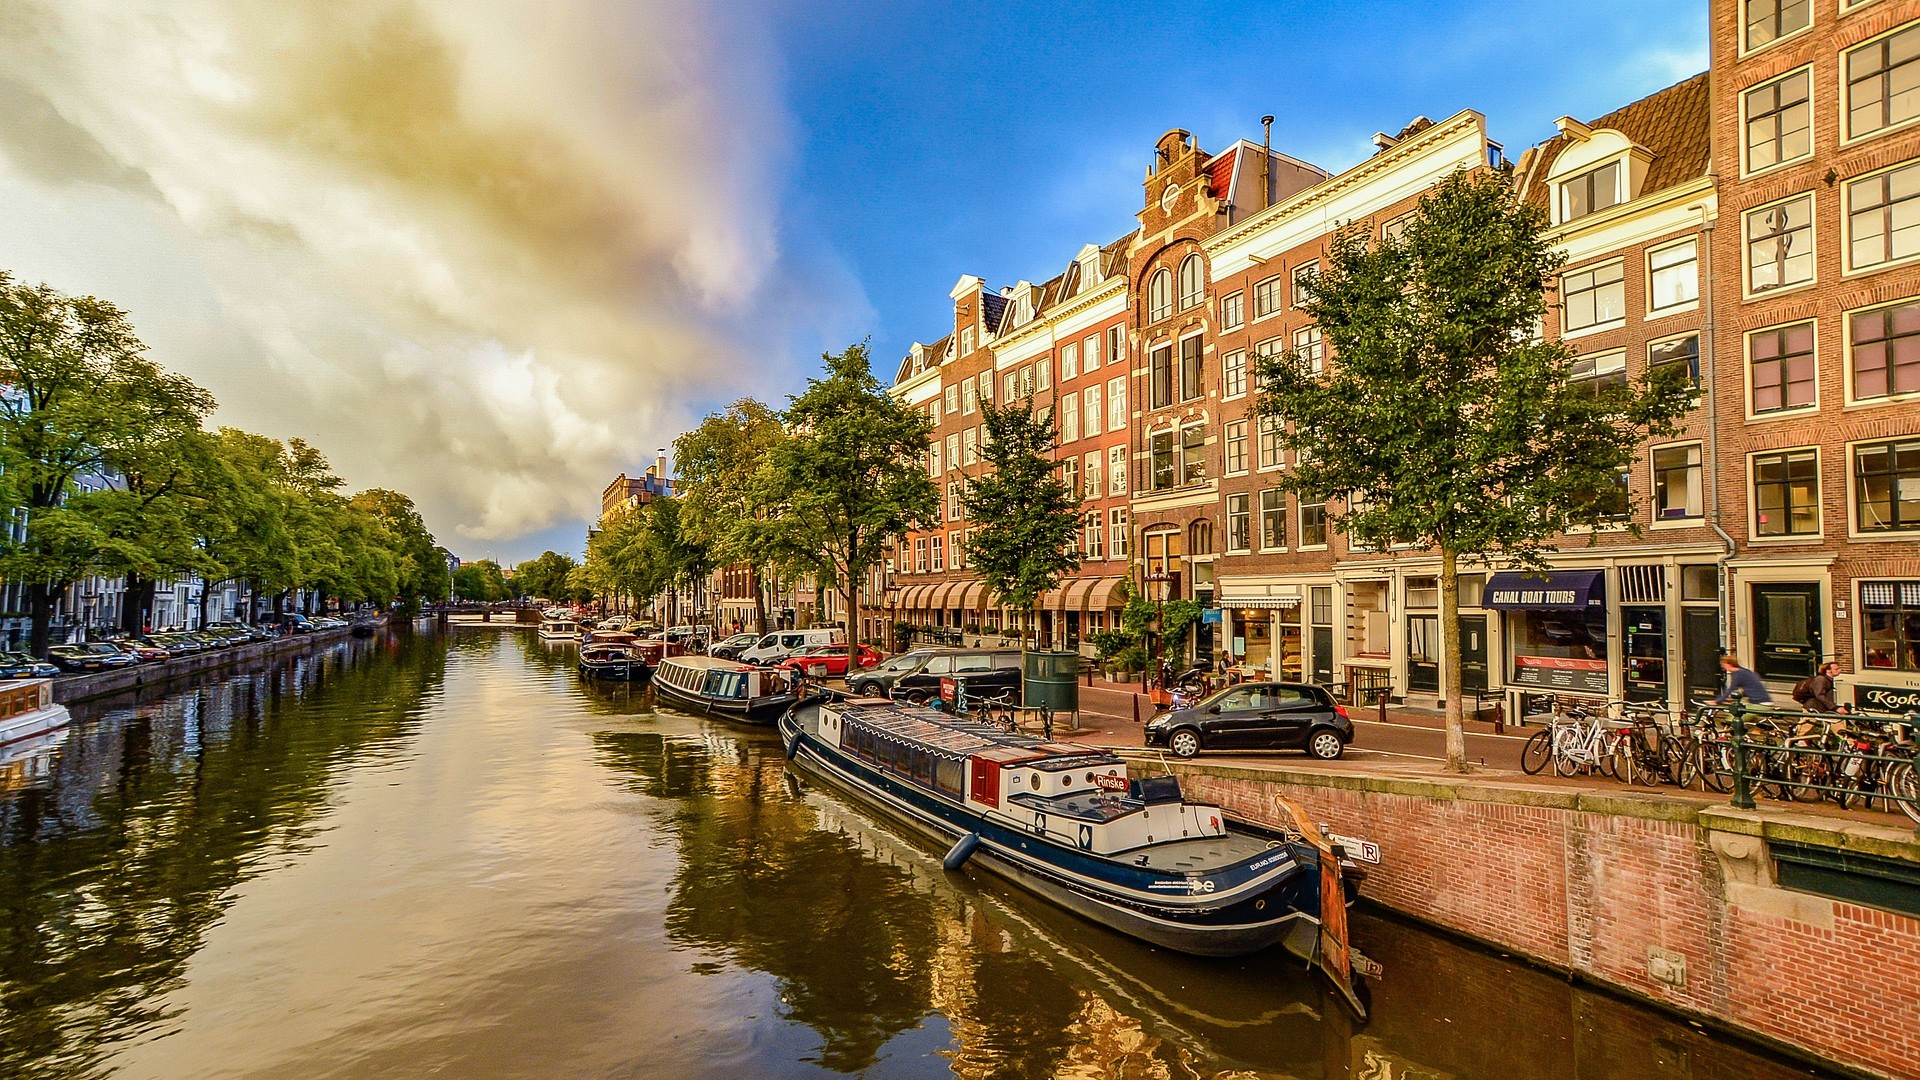 Over-tourism in Amsterdam - Risk Magazine